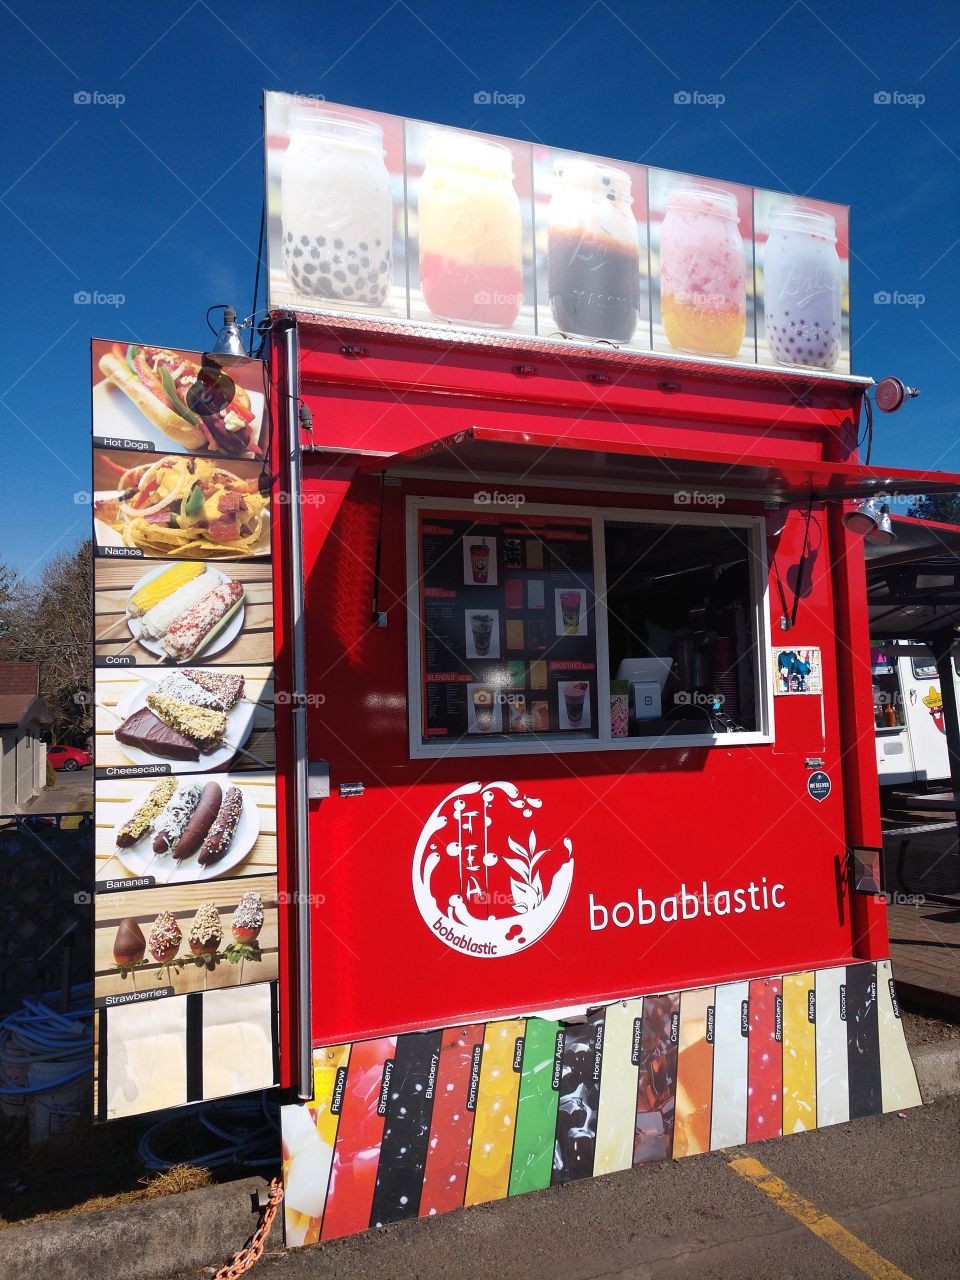 bobablastic food truck